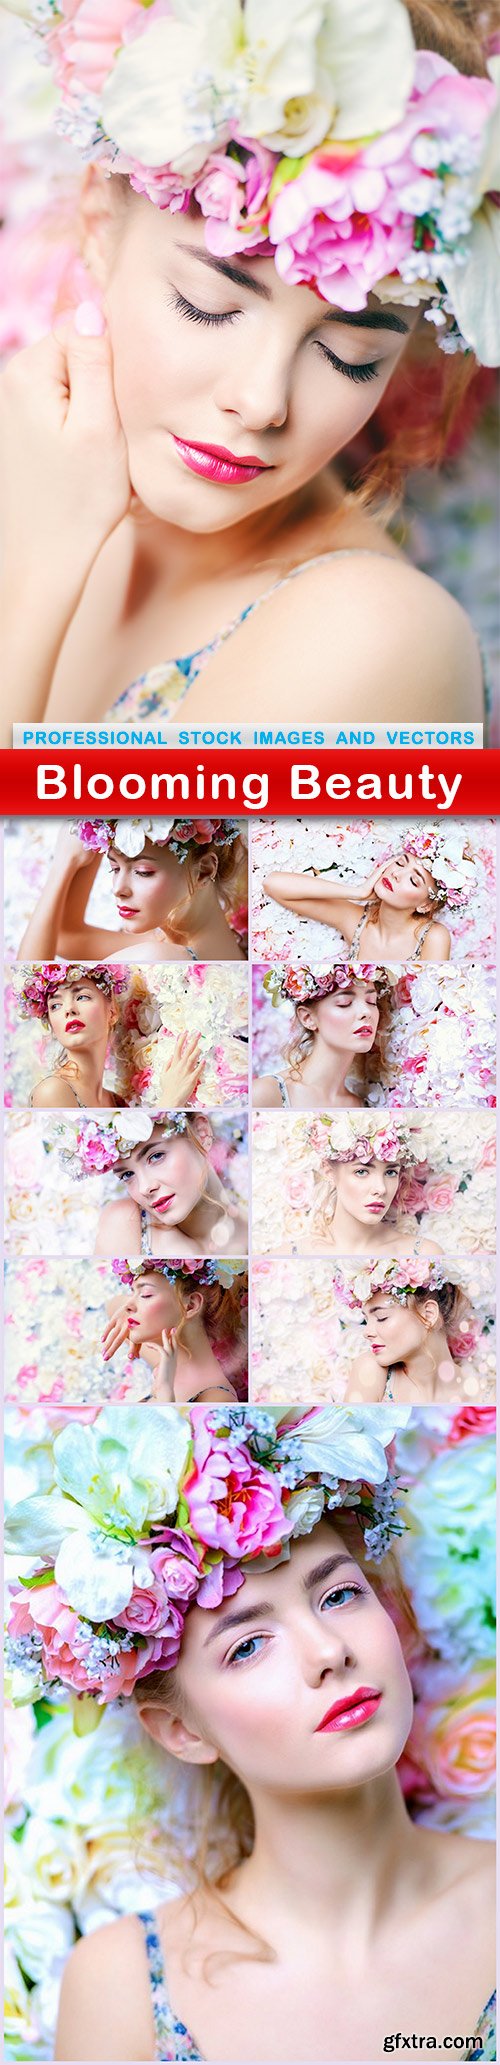 Blooming Beauty - 10 UHQ JPEG